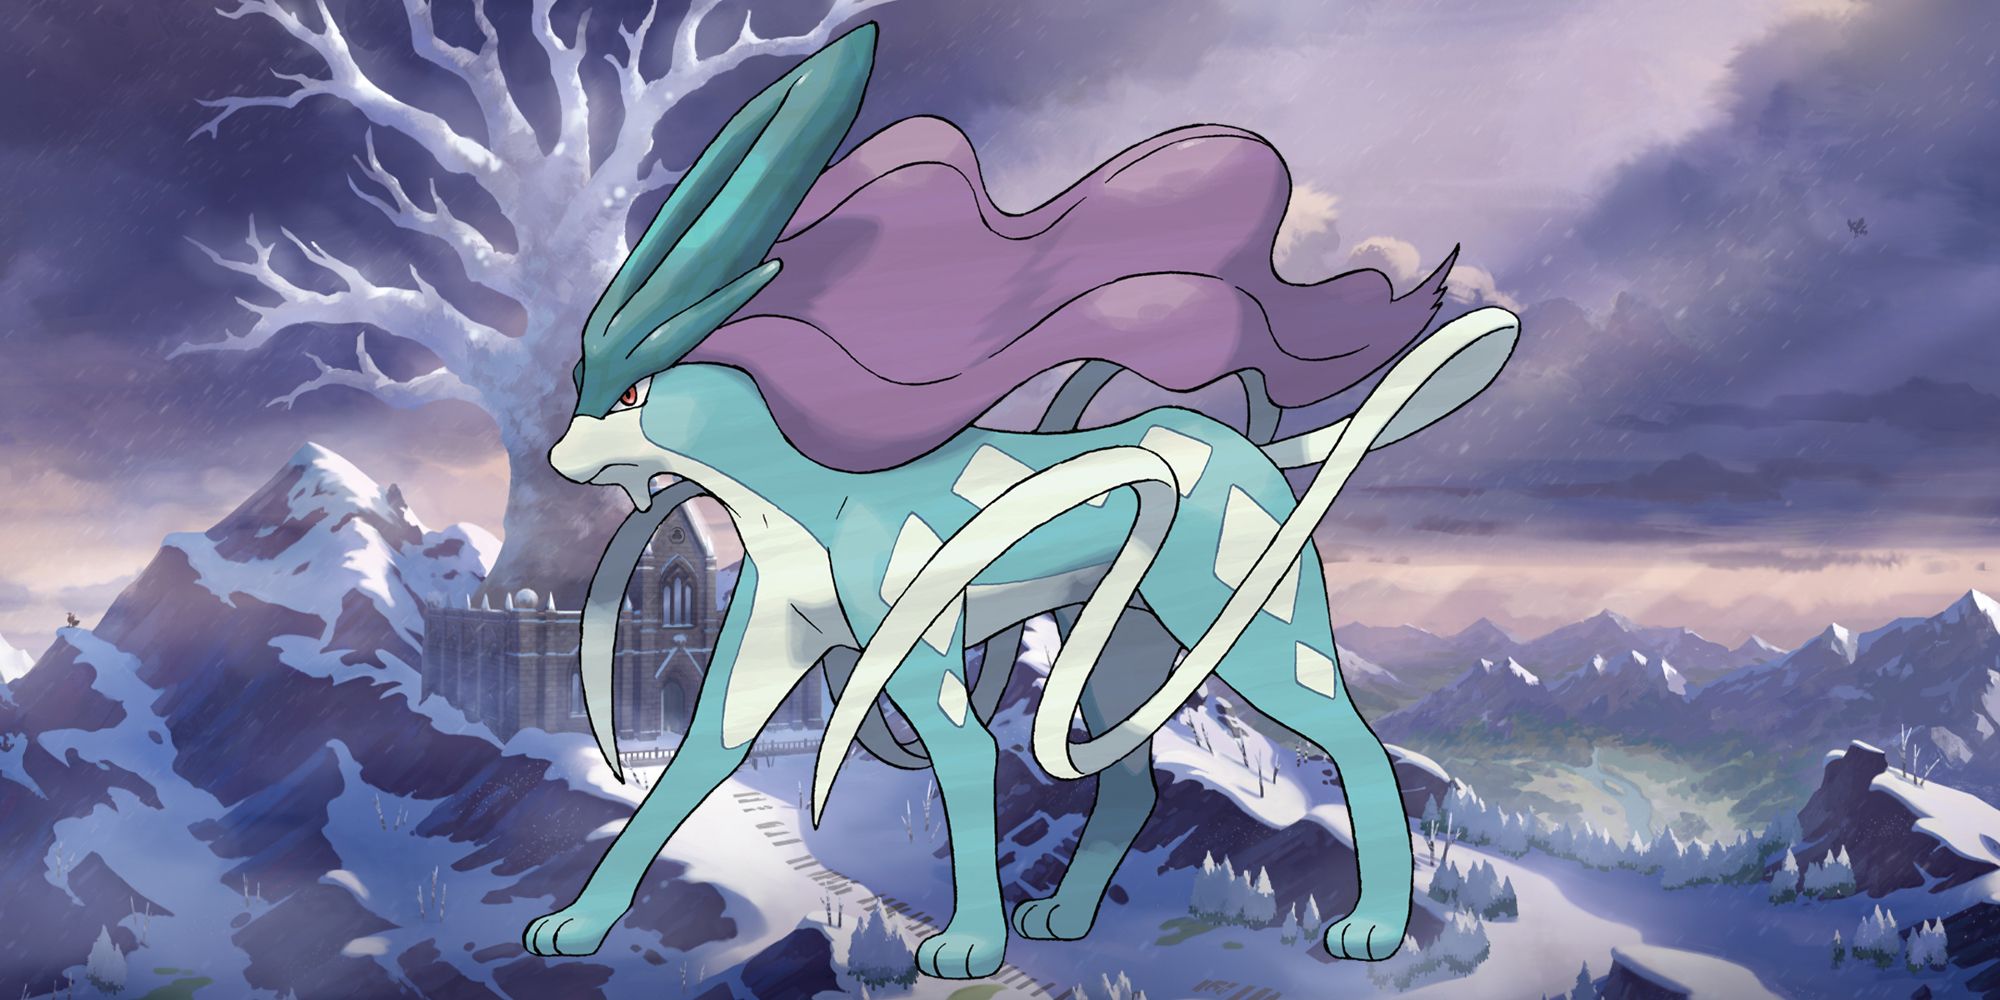 The Strongest Johto Legendary & Mythical Pokémon Ranked